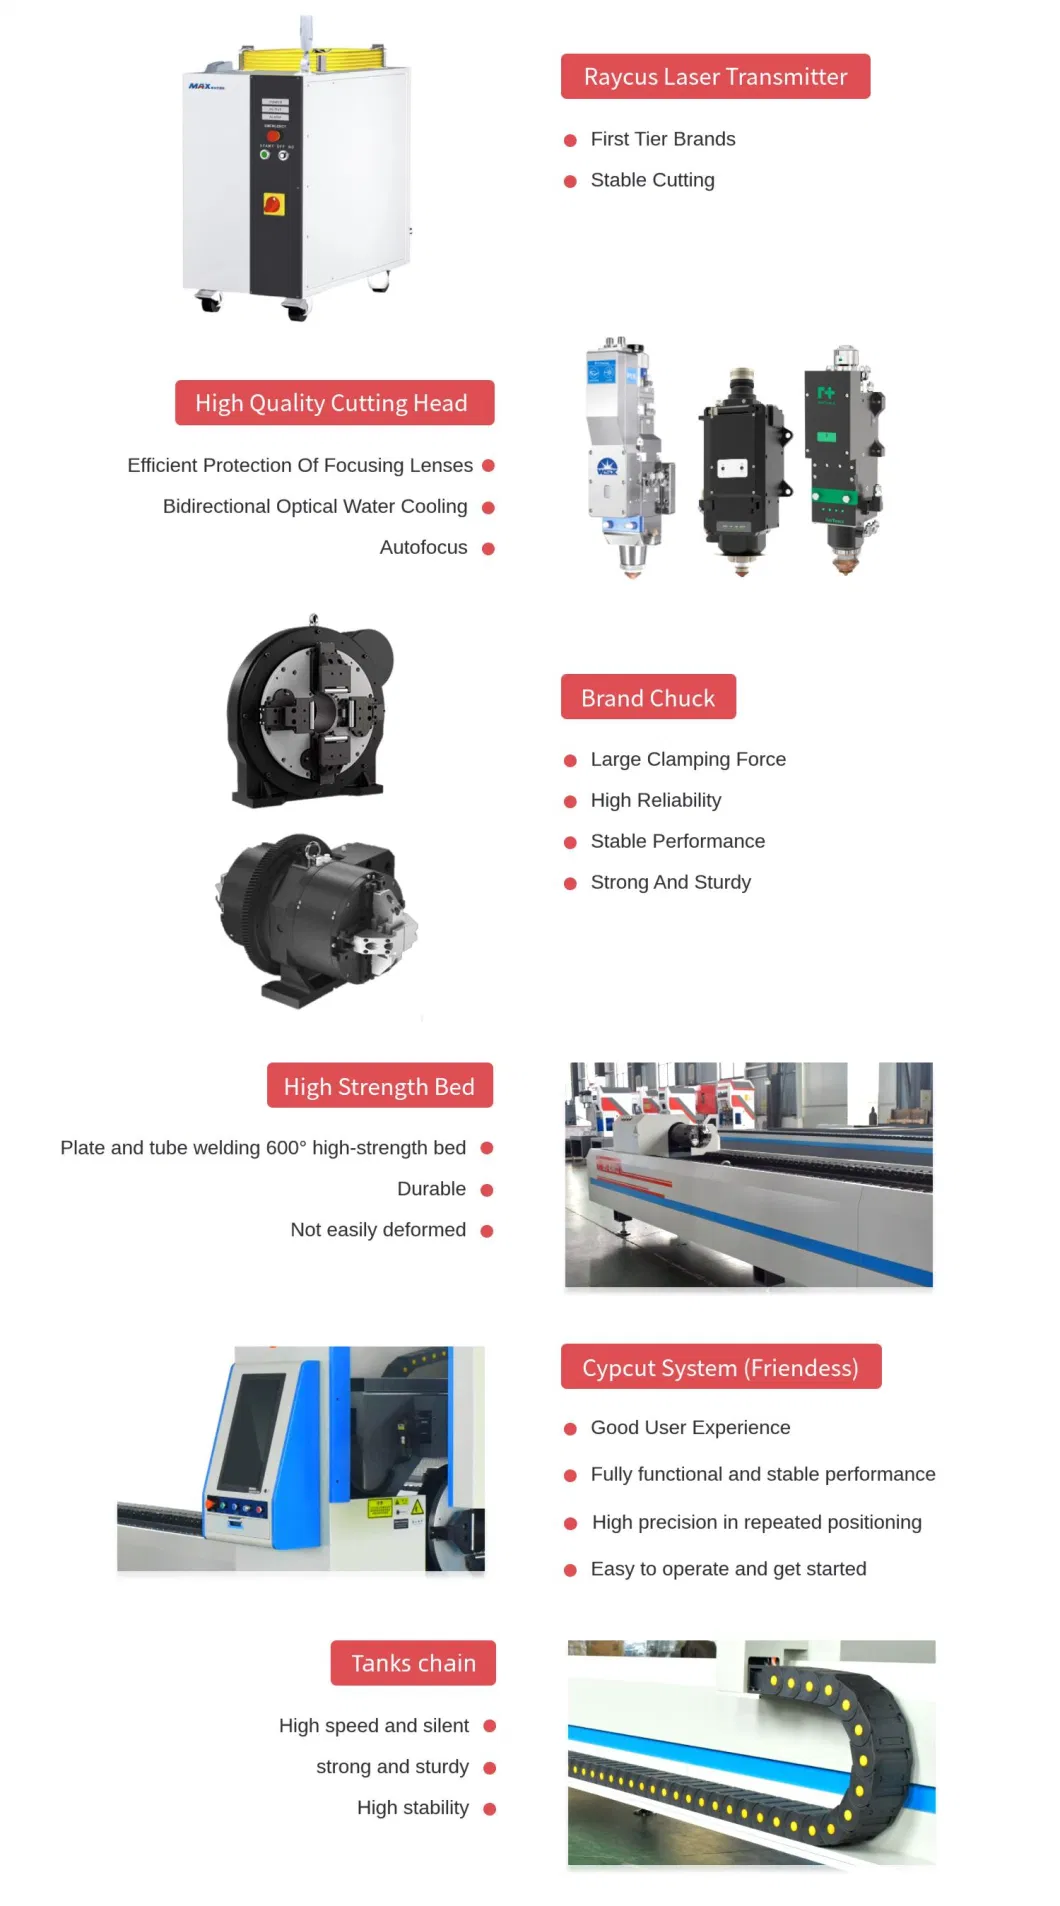 Hcgmt&reg; 6m/350mm/30000W Carbon Pipe CNC Fiber Laser Cutter Precision Cutting Industrial Lathe